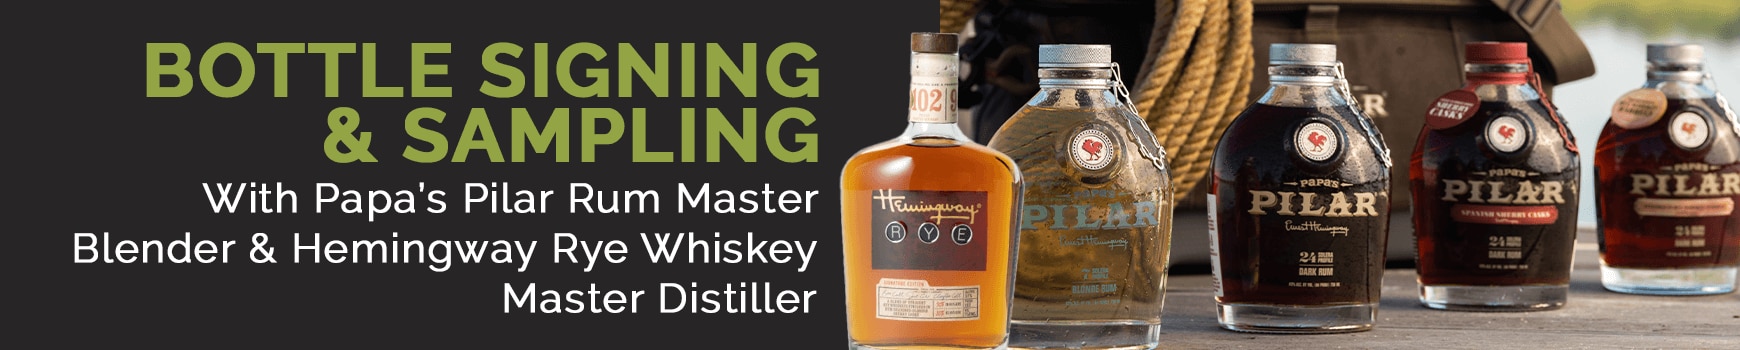 Bottle Signing & Sampling with Papa's Pilar Rum Master Blender & Hemingway Rye Whiskey Master Distiller.